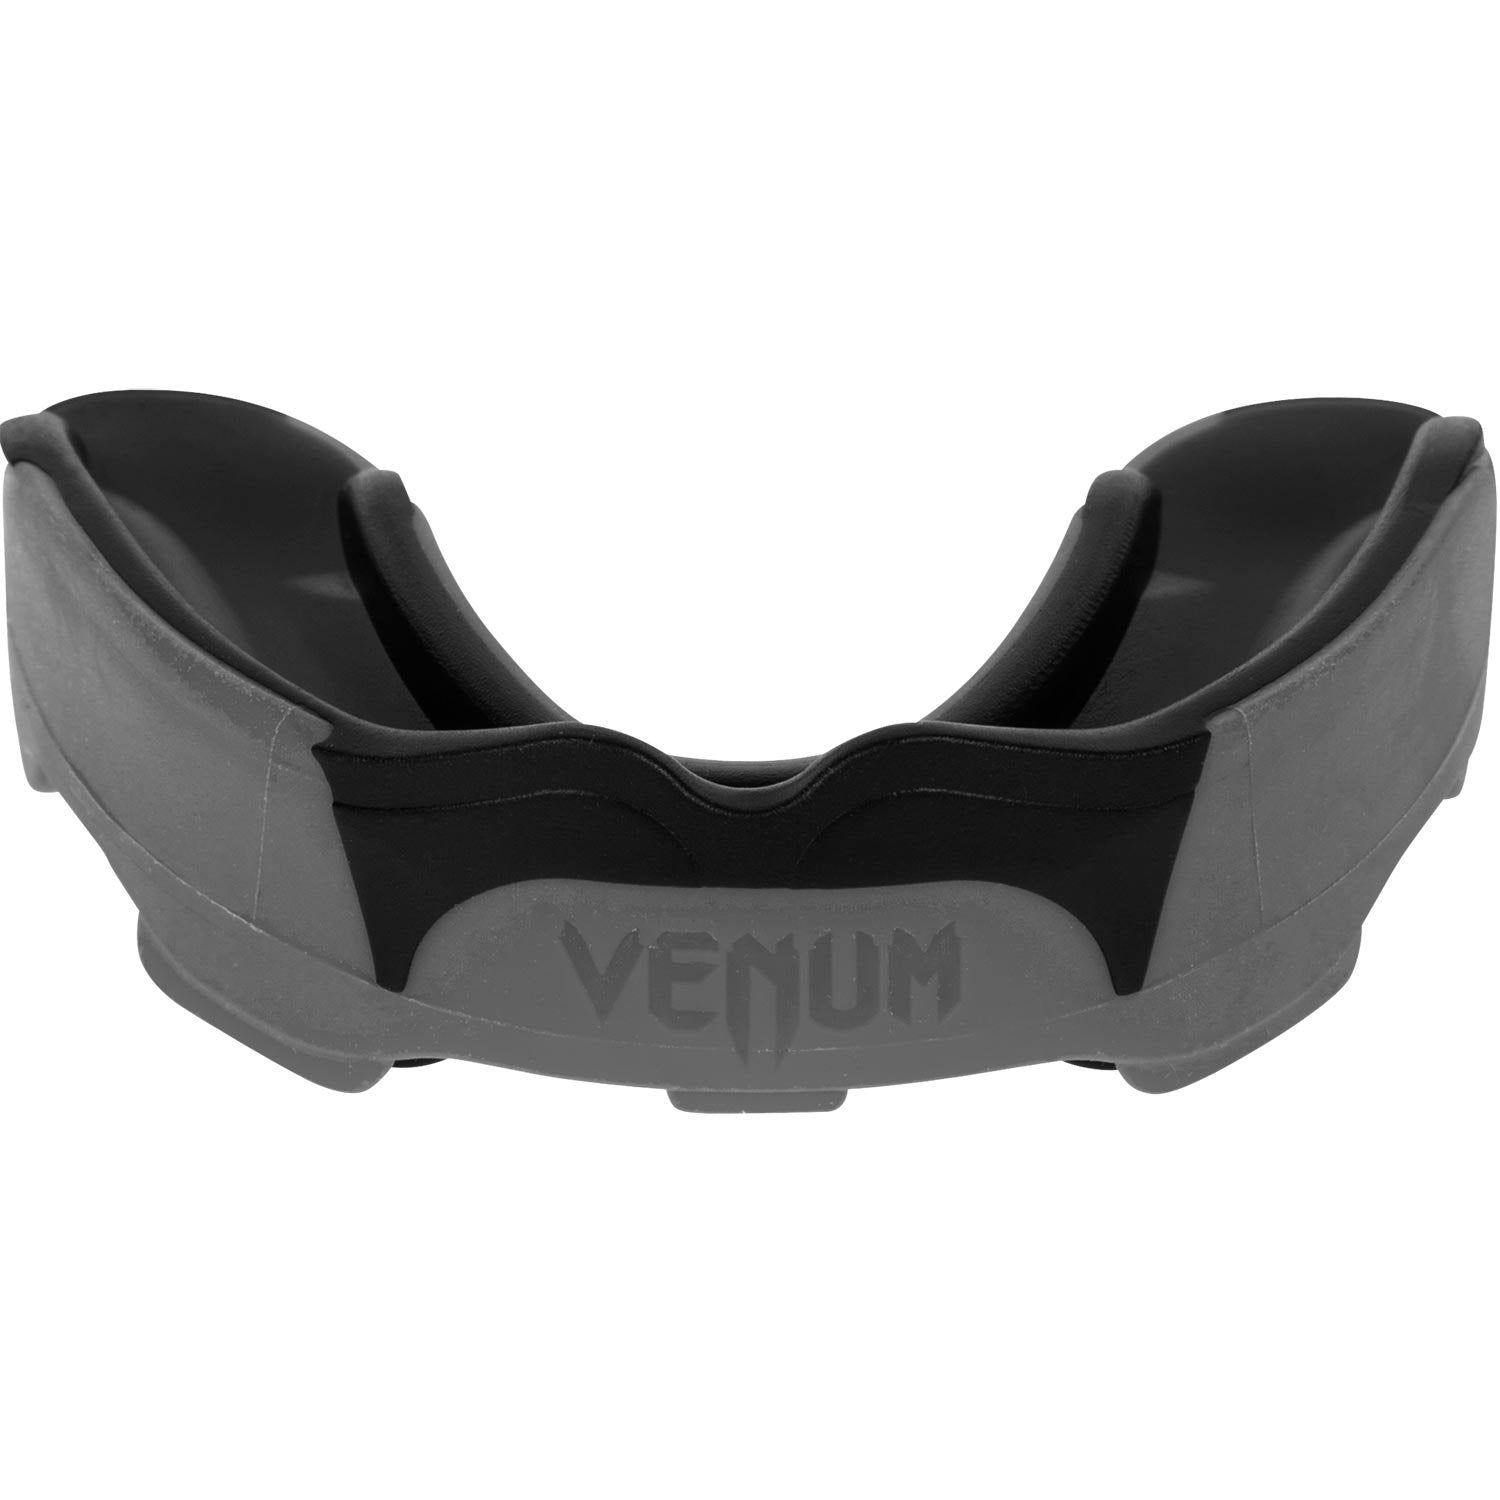 Venum Predator Mouthguard - Best Price online Prokicksports.com